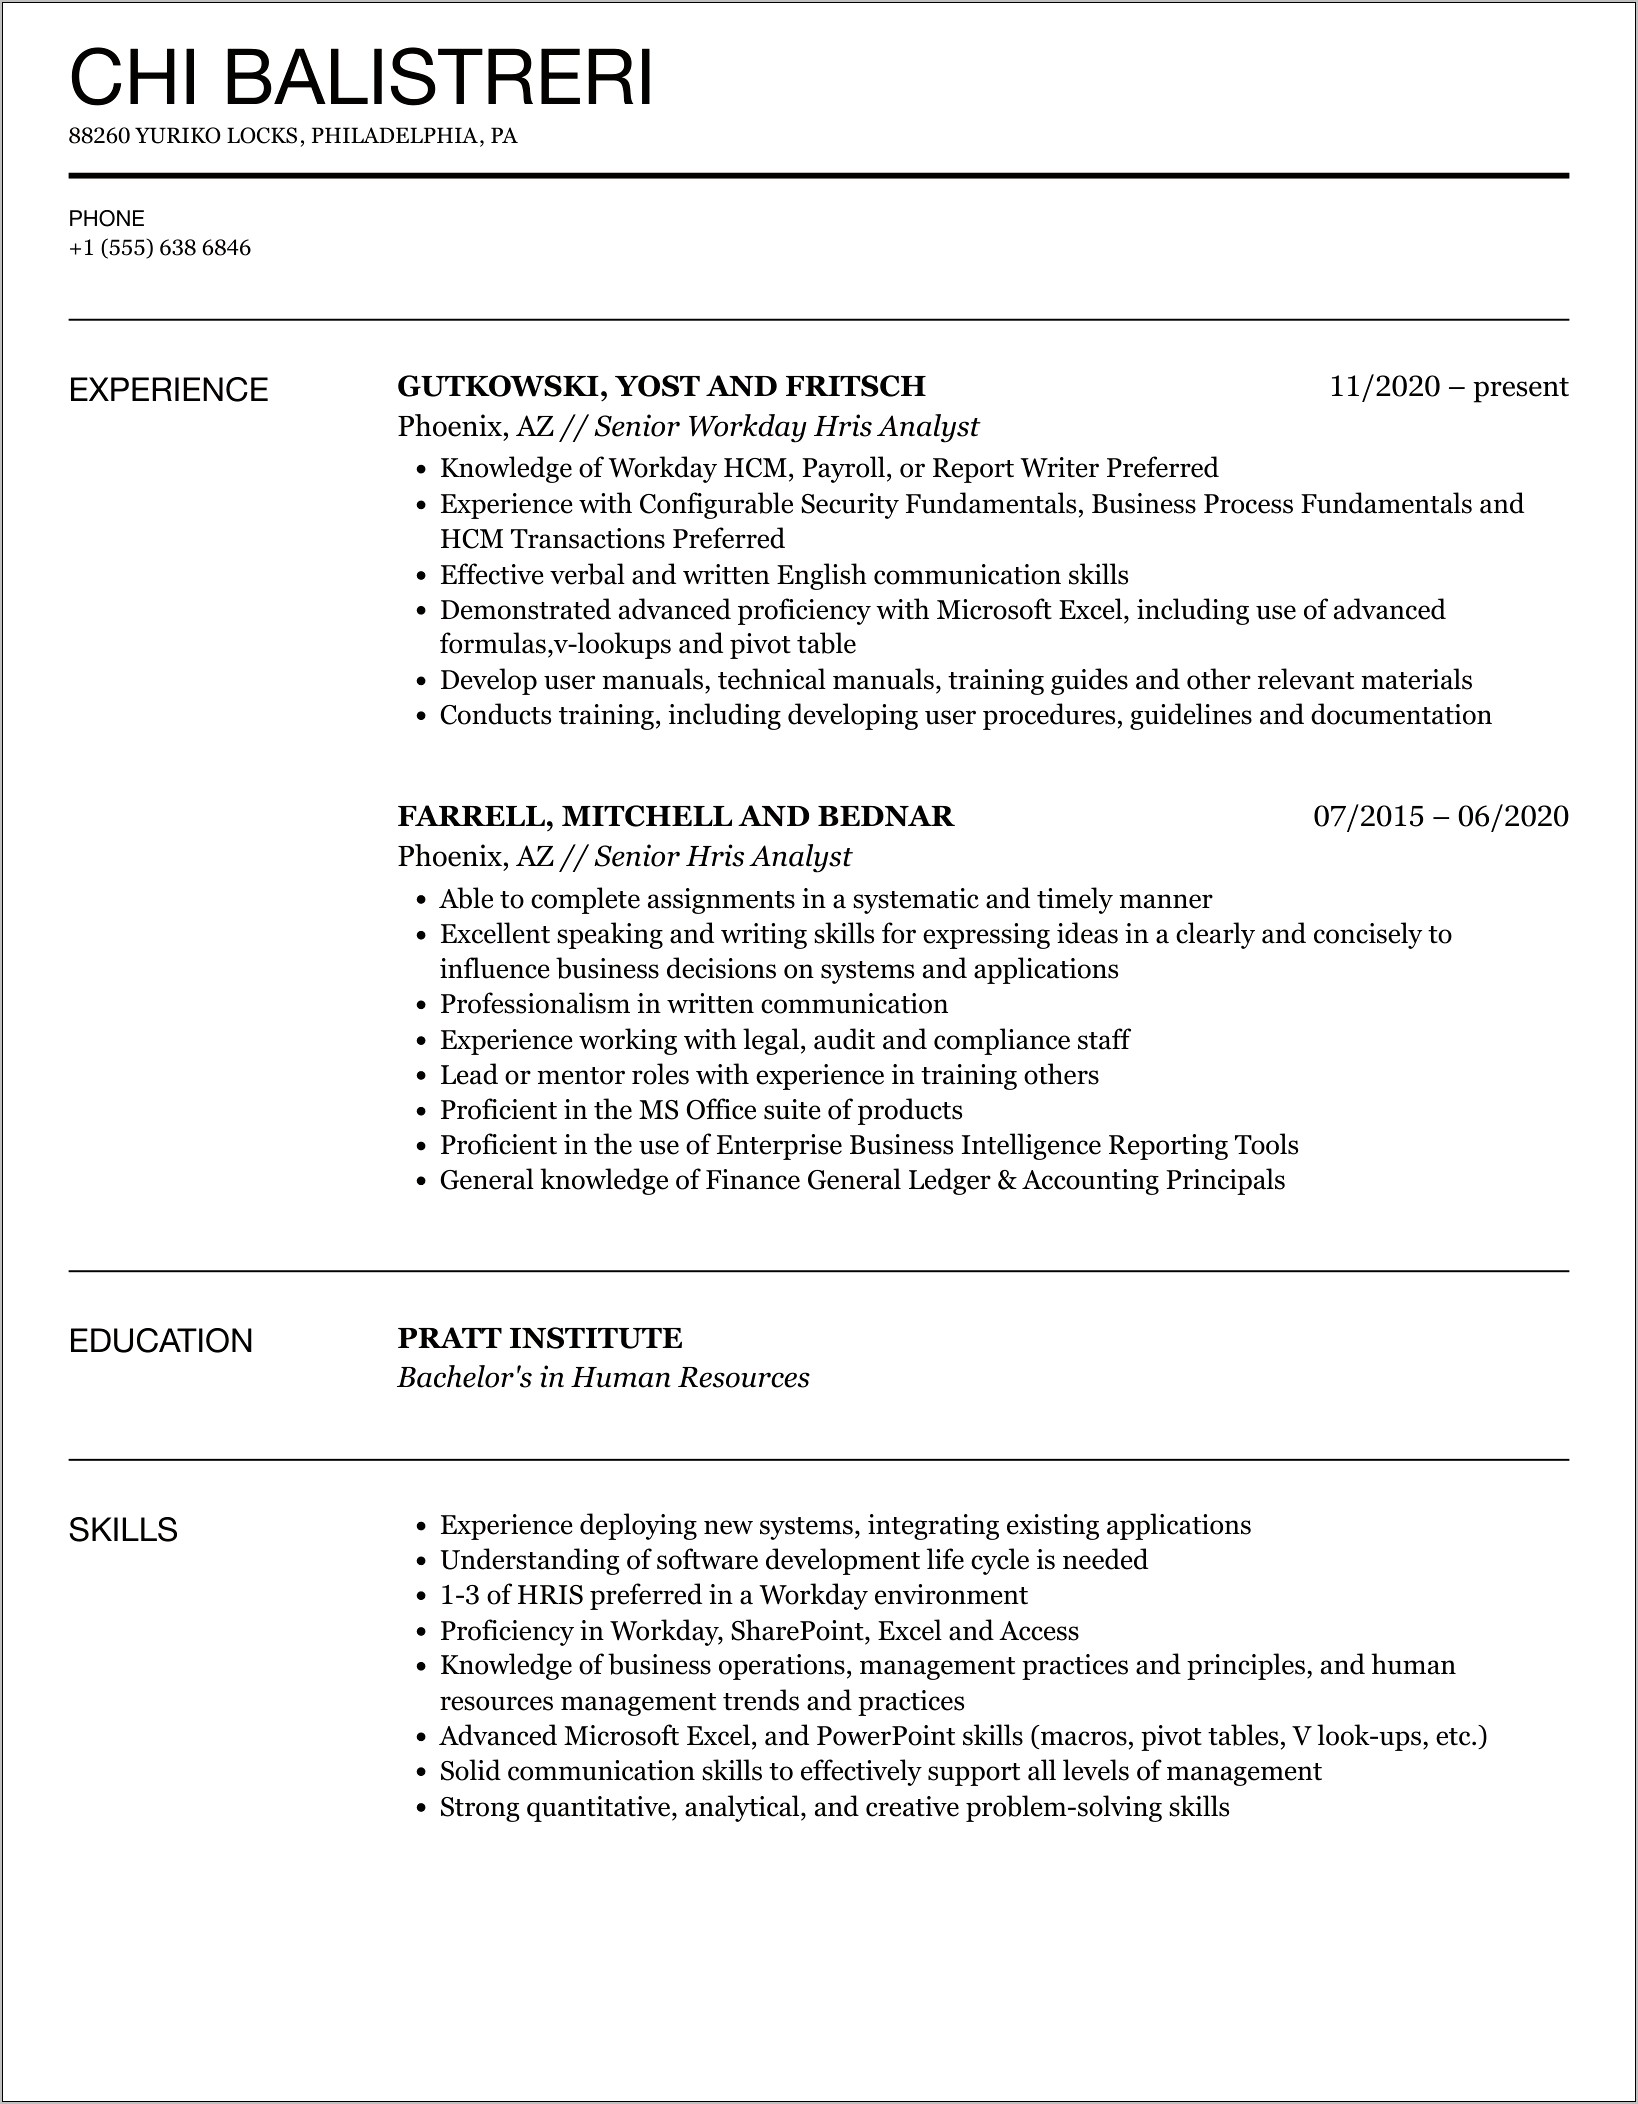 Sample Resume For Hris Manager